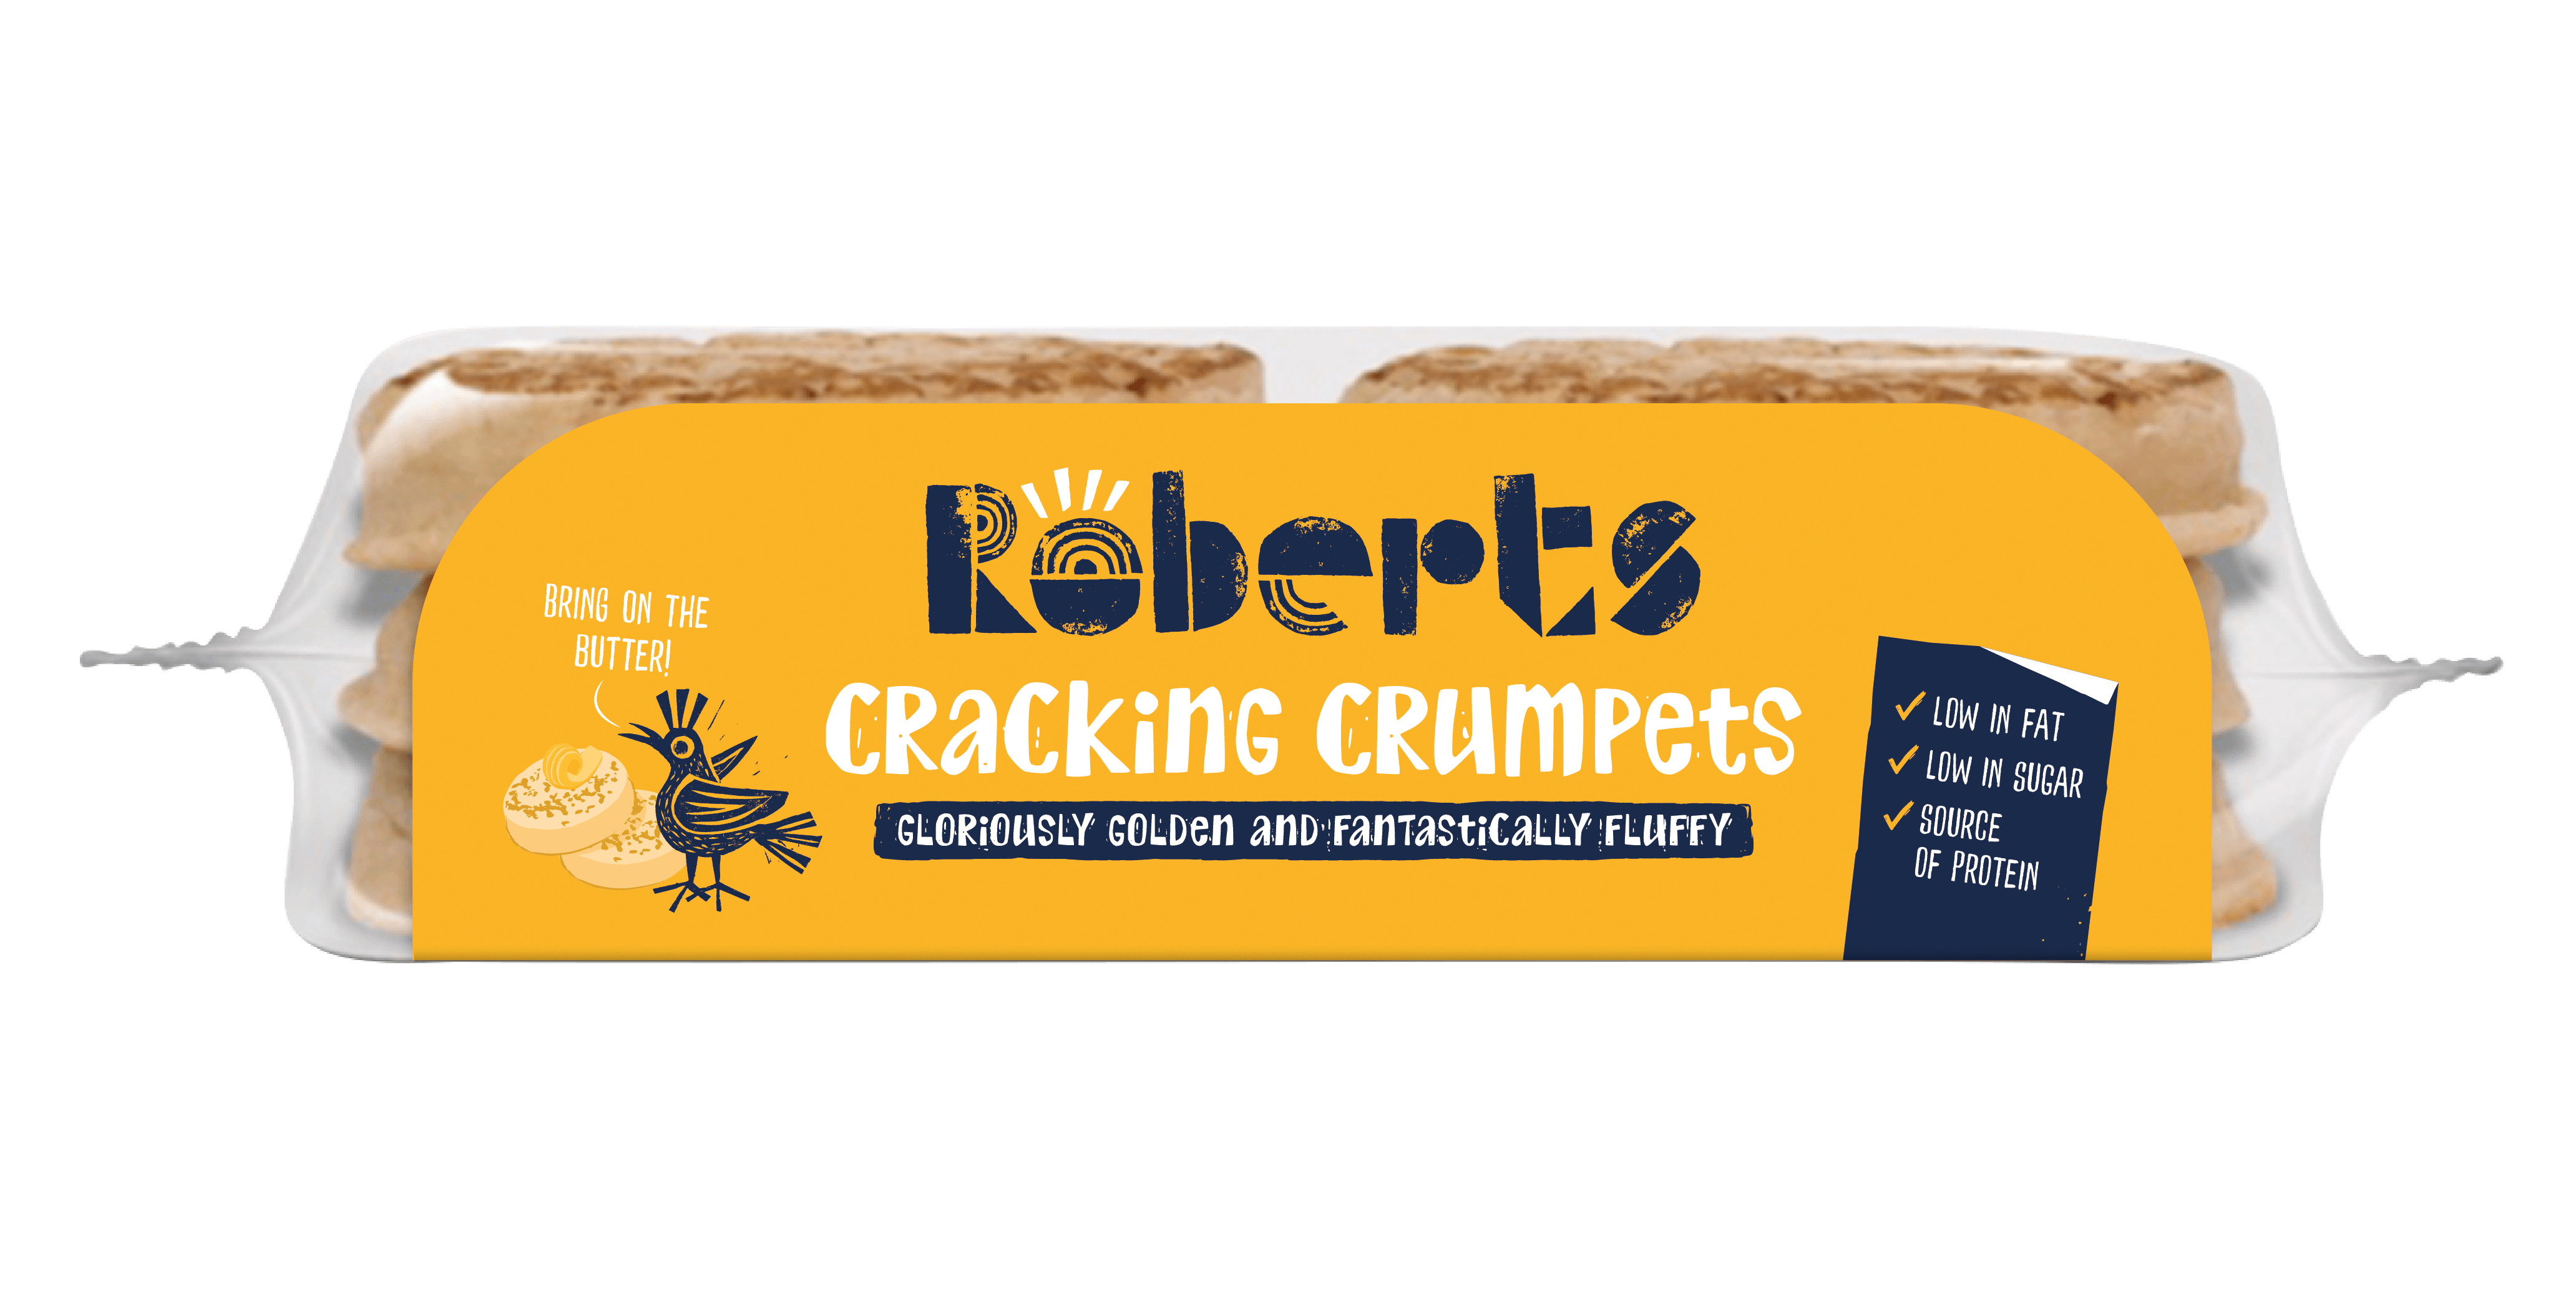 Cracking Crumpets